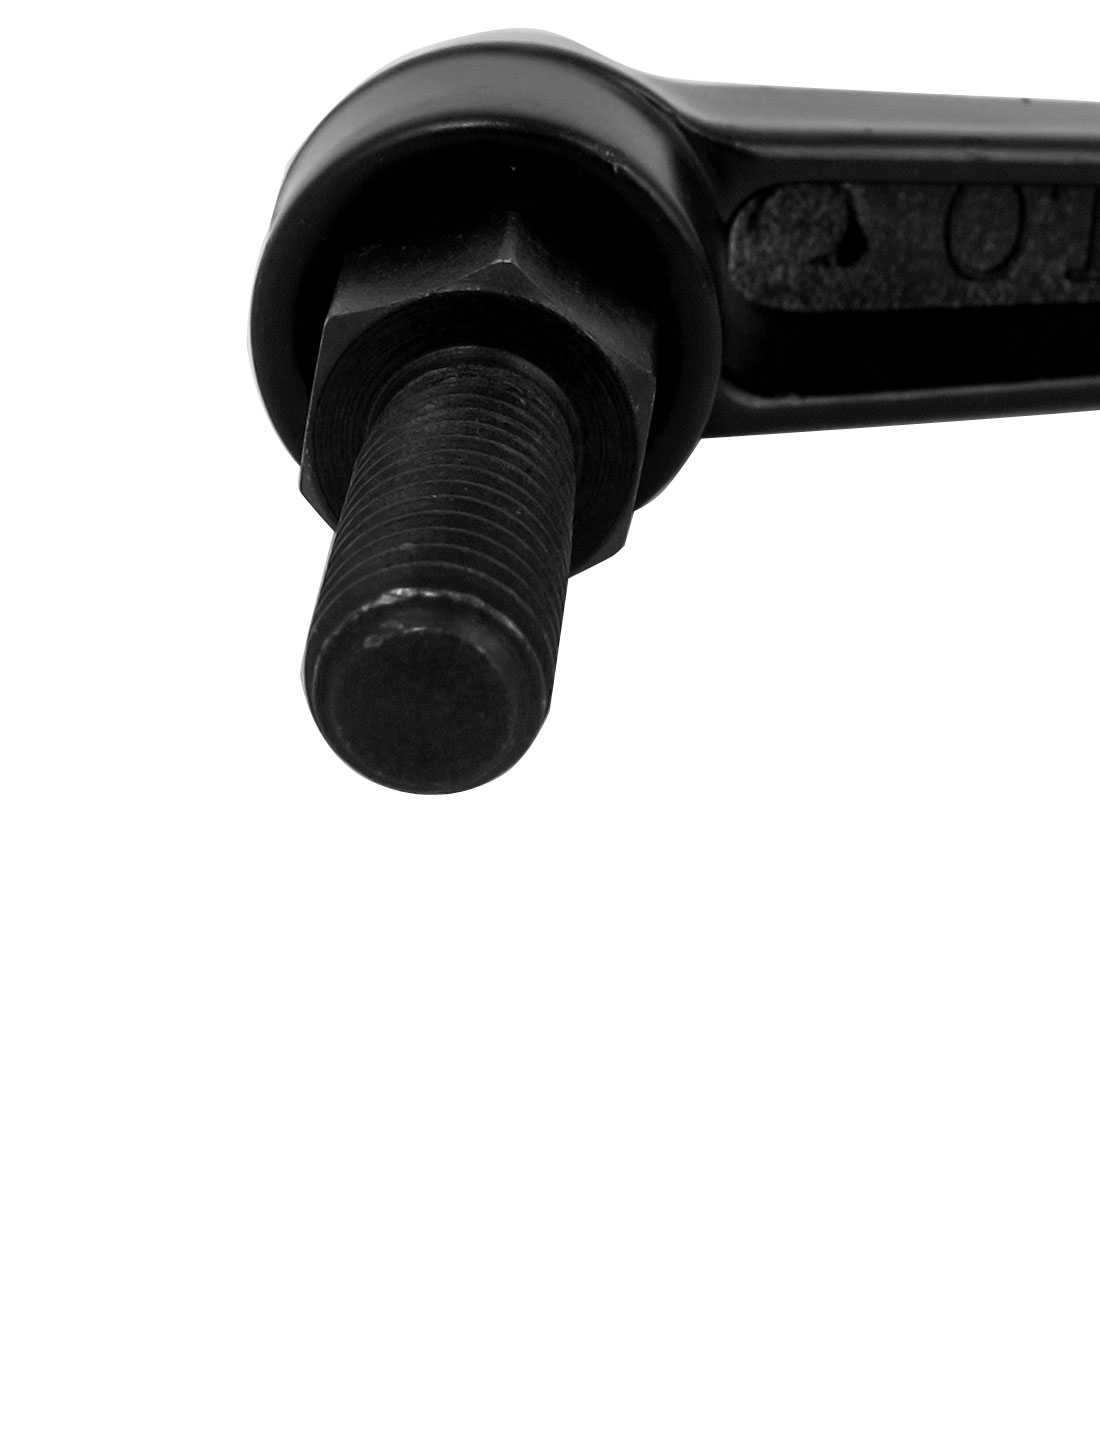 M8x20mm Male Thread Lathe Machine Metal Adjustable Handle Lever Grip Black 2pcs